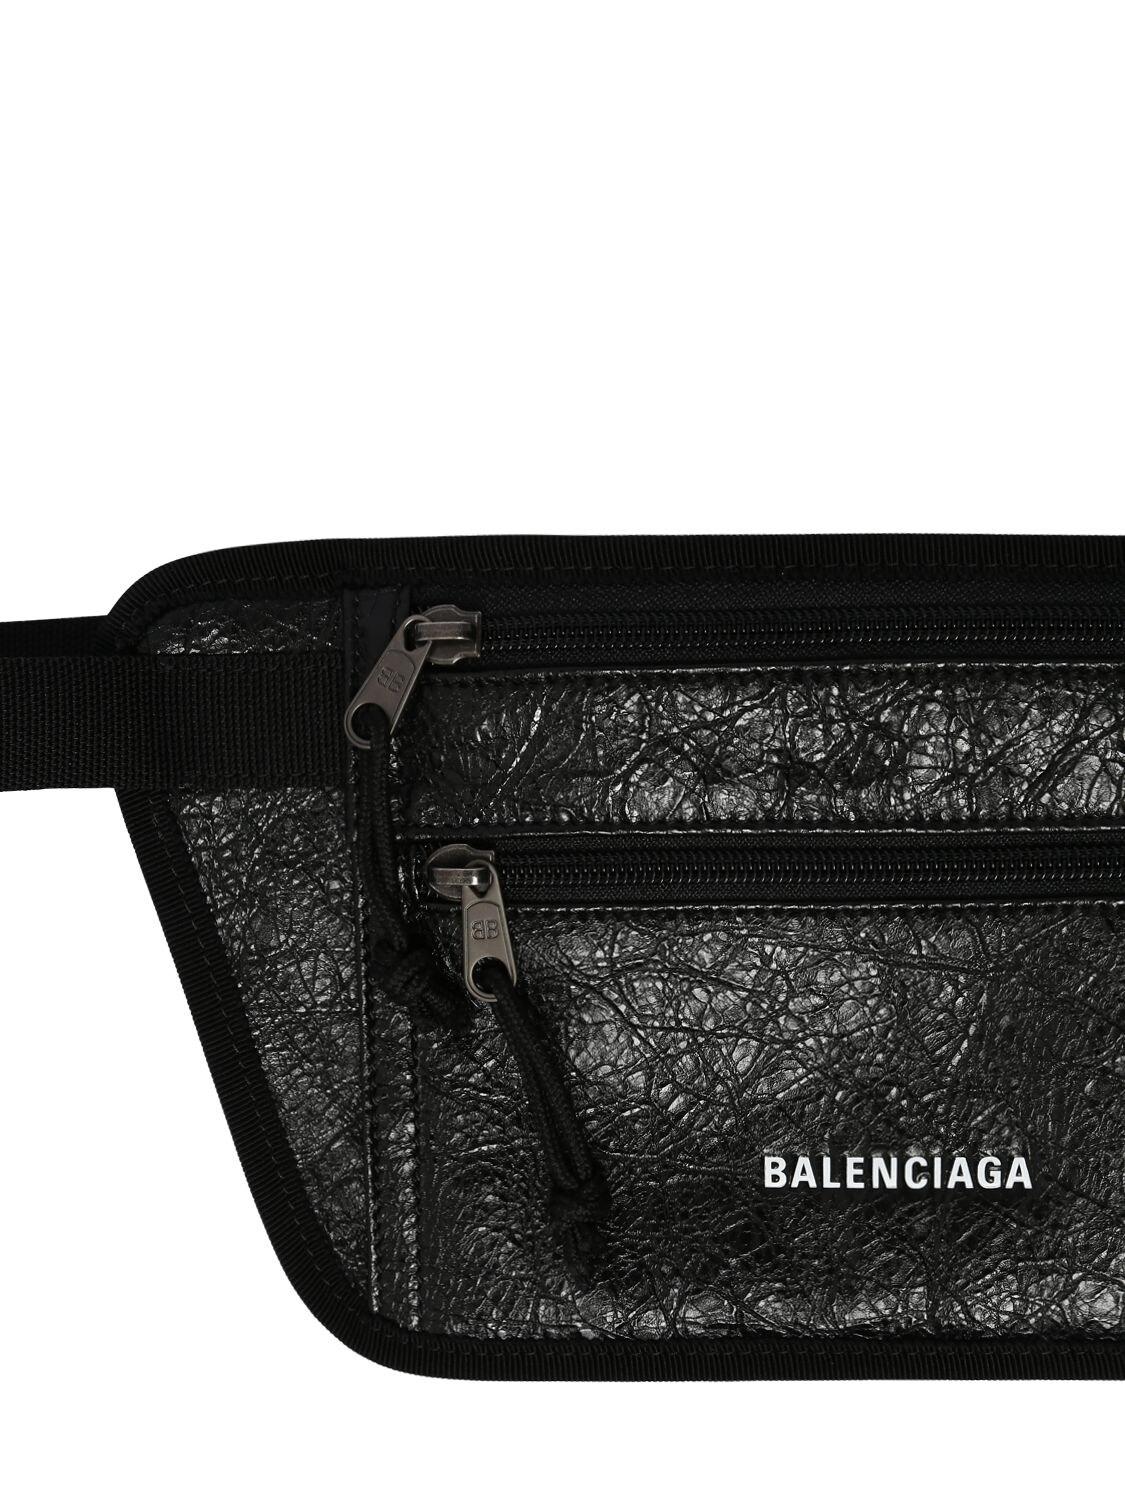 Balenciaga Flat Leather Belt Bag in Black for Men - Lyst